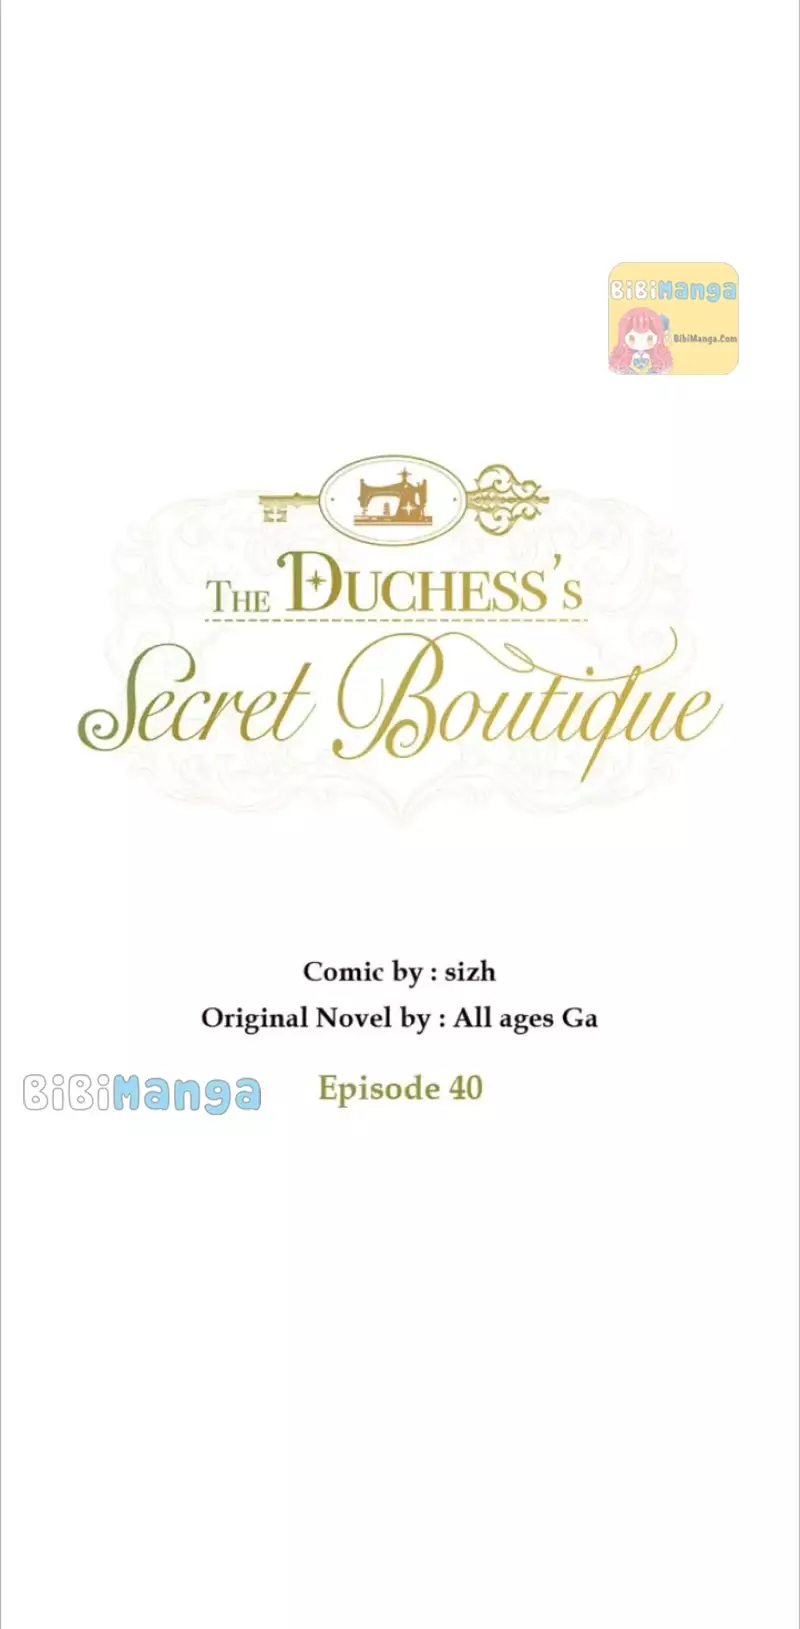 The Duchess’S Secret Dressing Room - 40 page 16-59b0cb0d